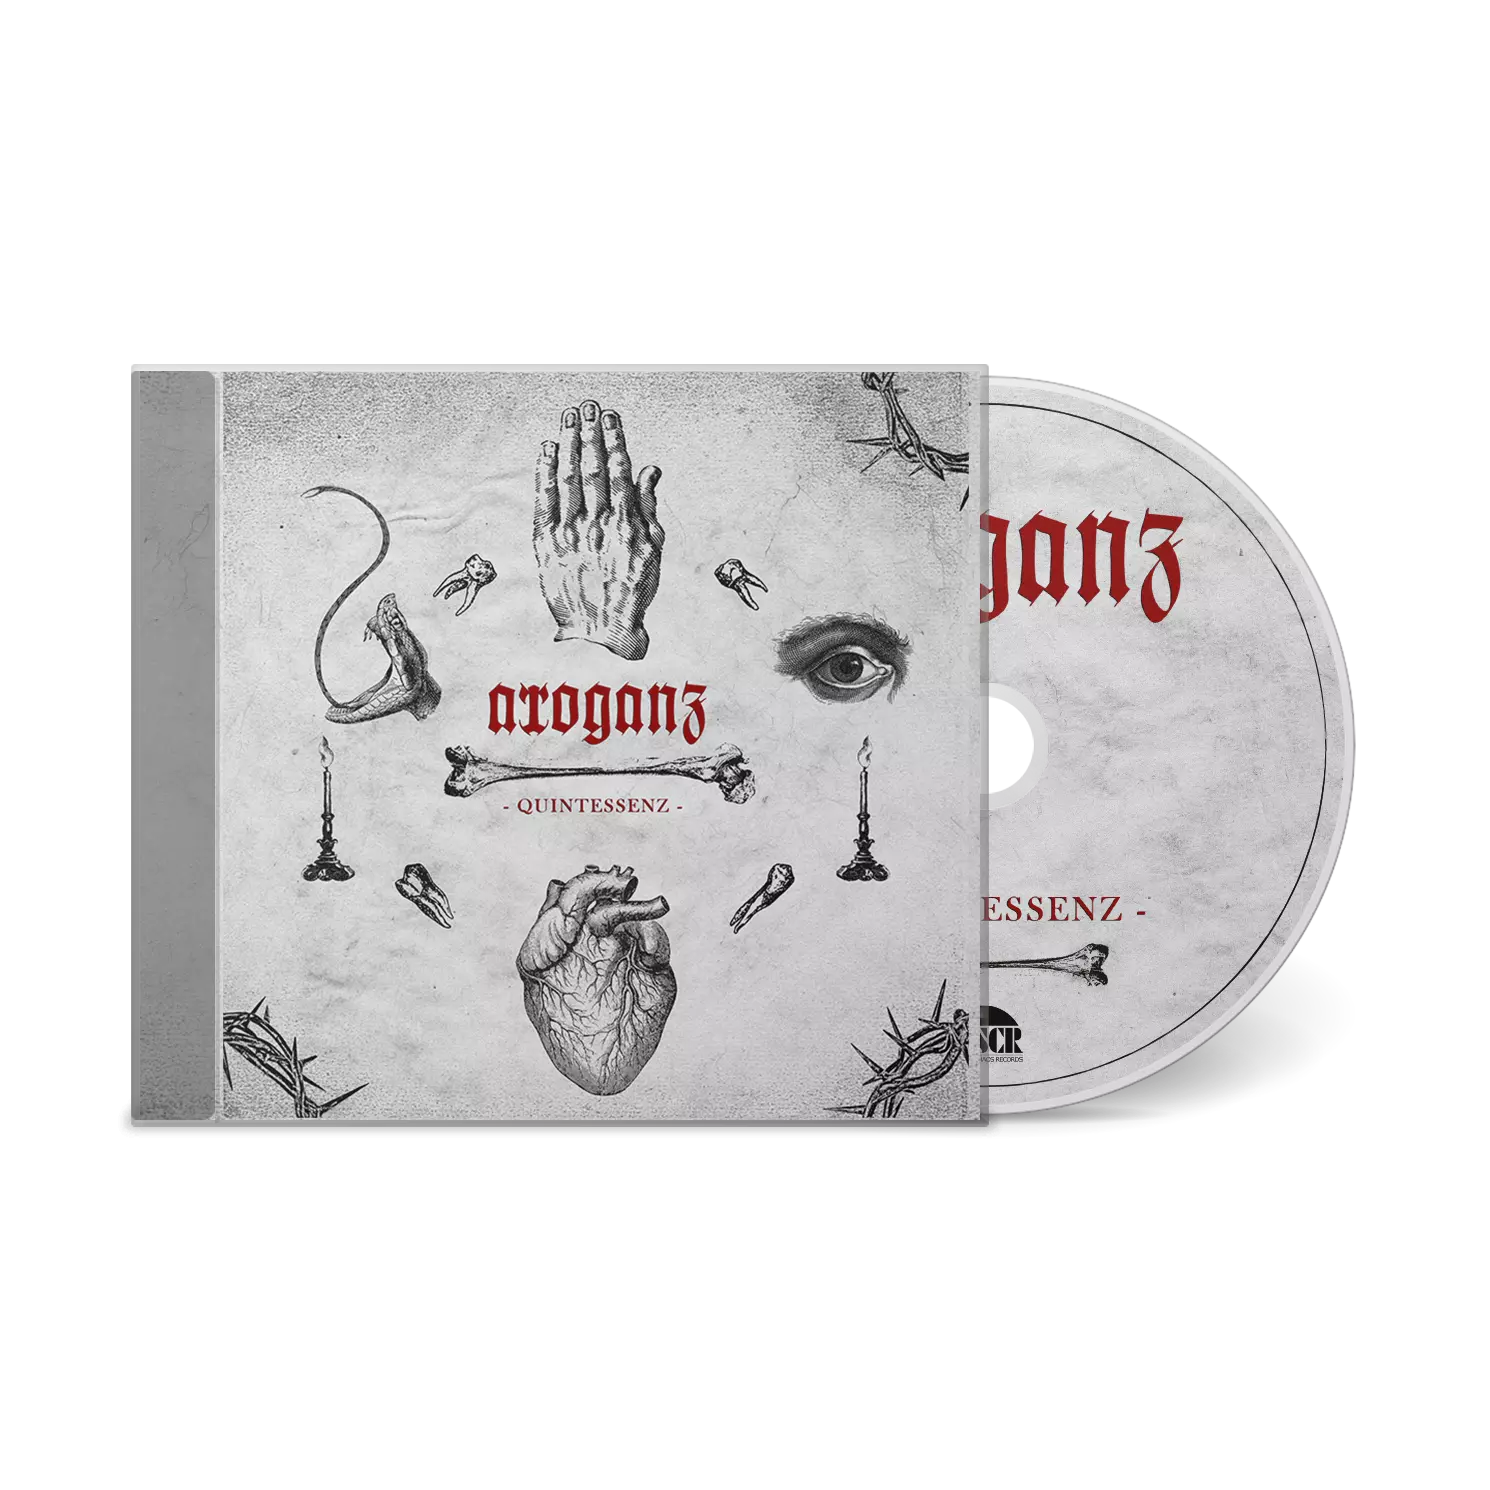 ARROGANZ - Quintessenz [JEWELCASE CD]